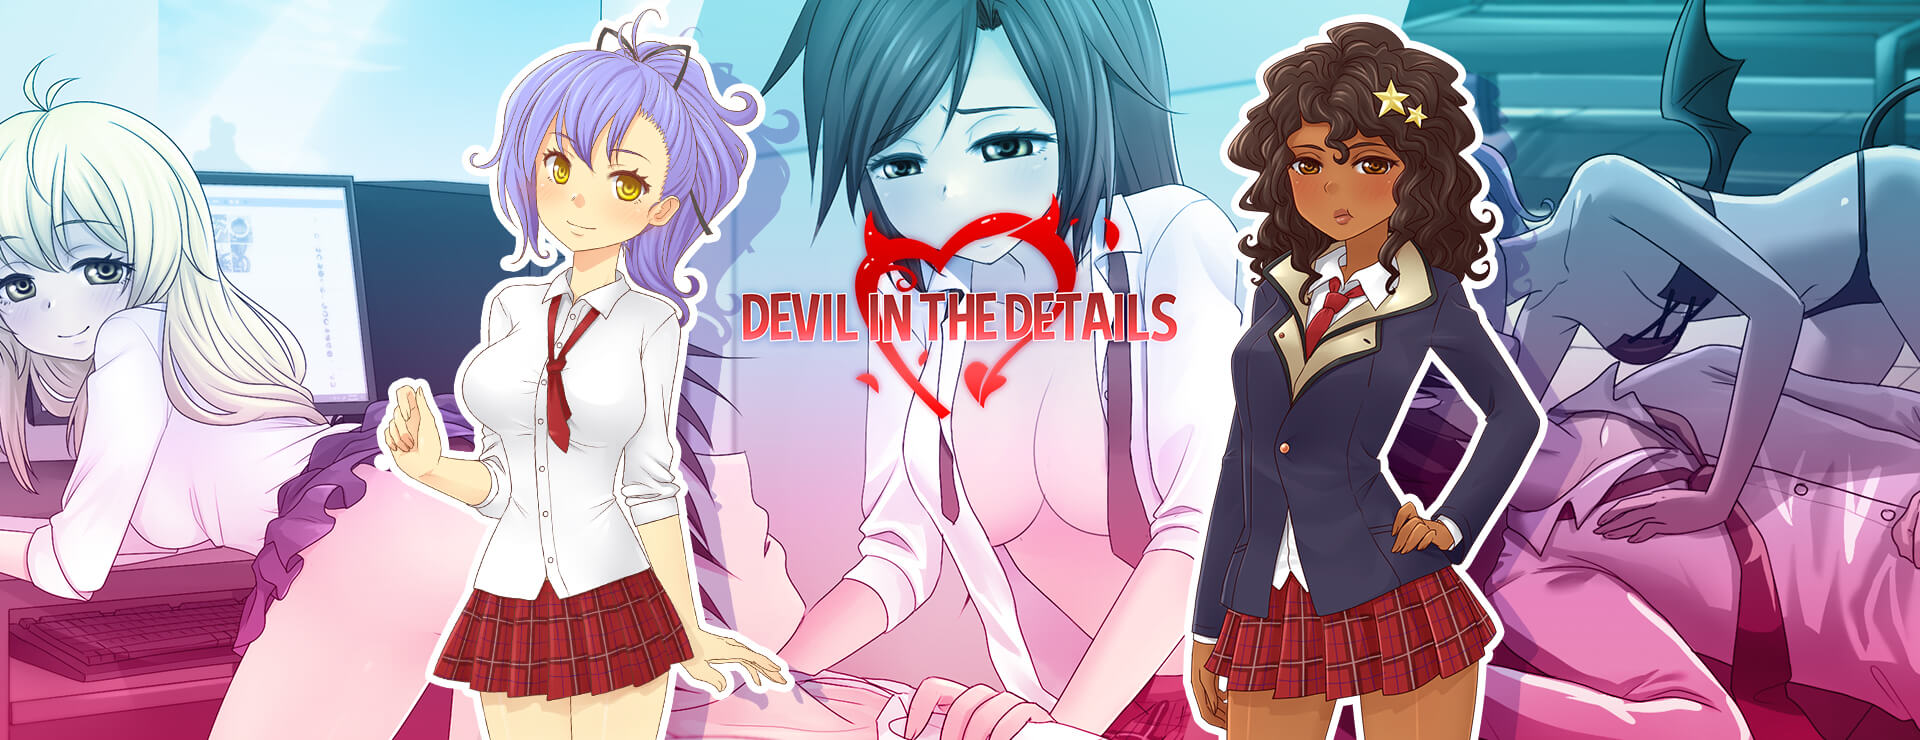 Devil in the Details - ビジュアルノベル ゲーム